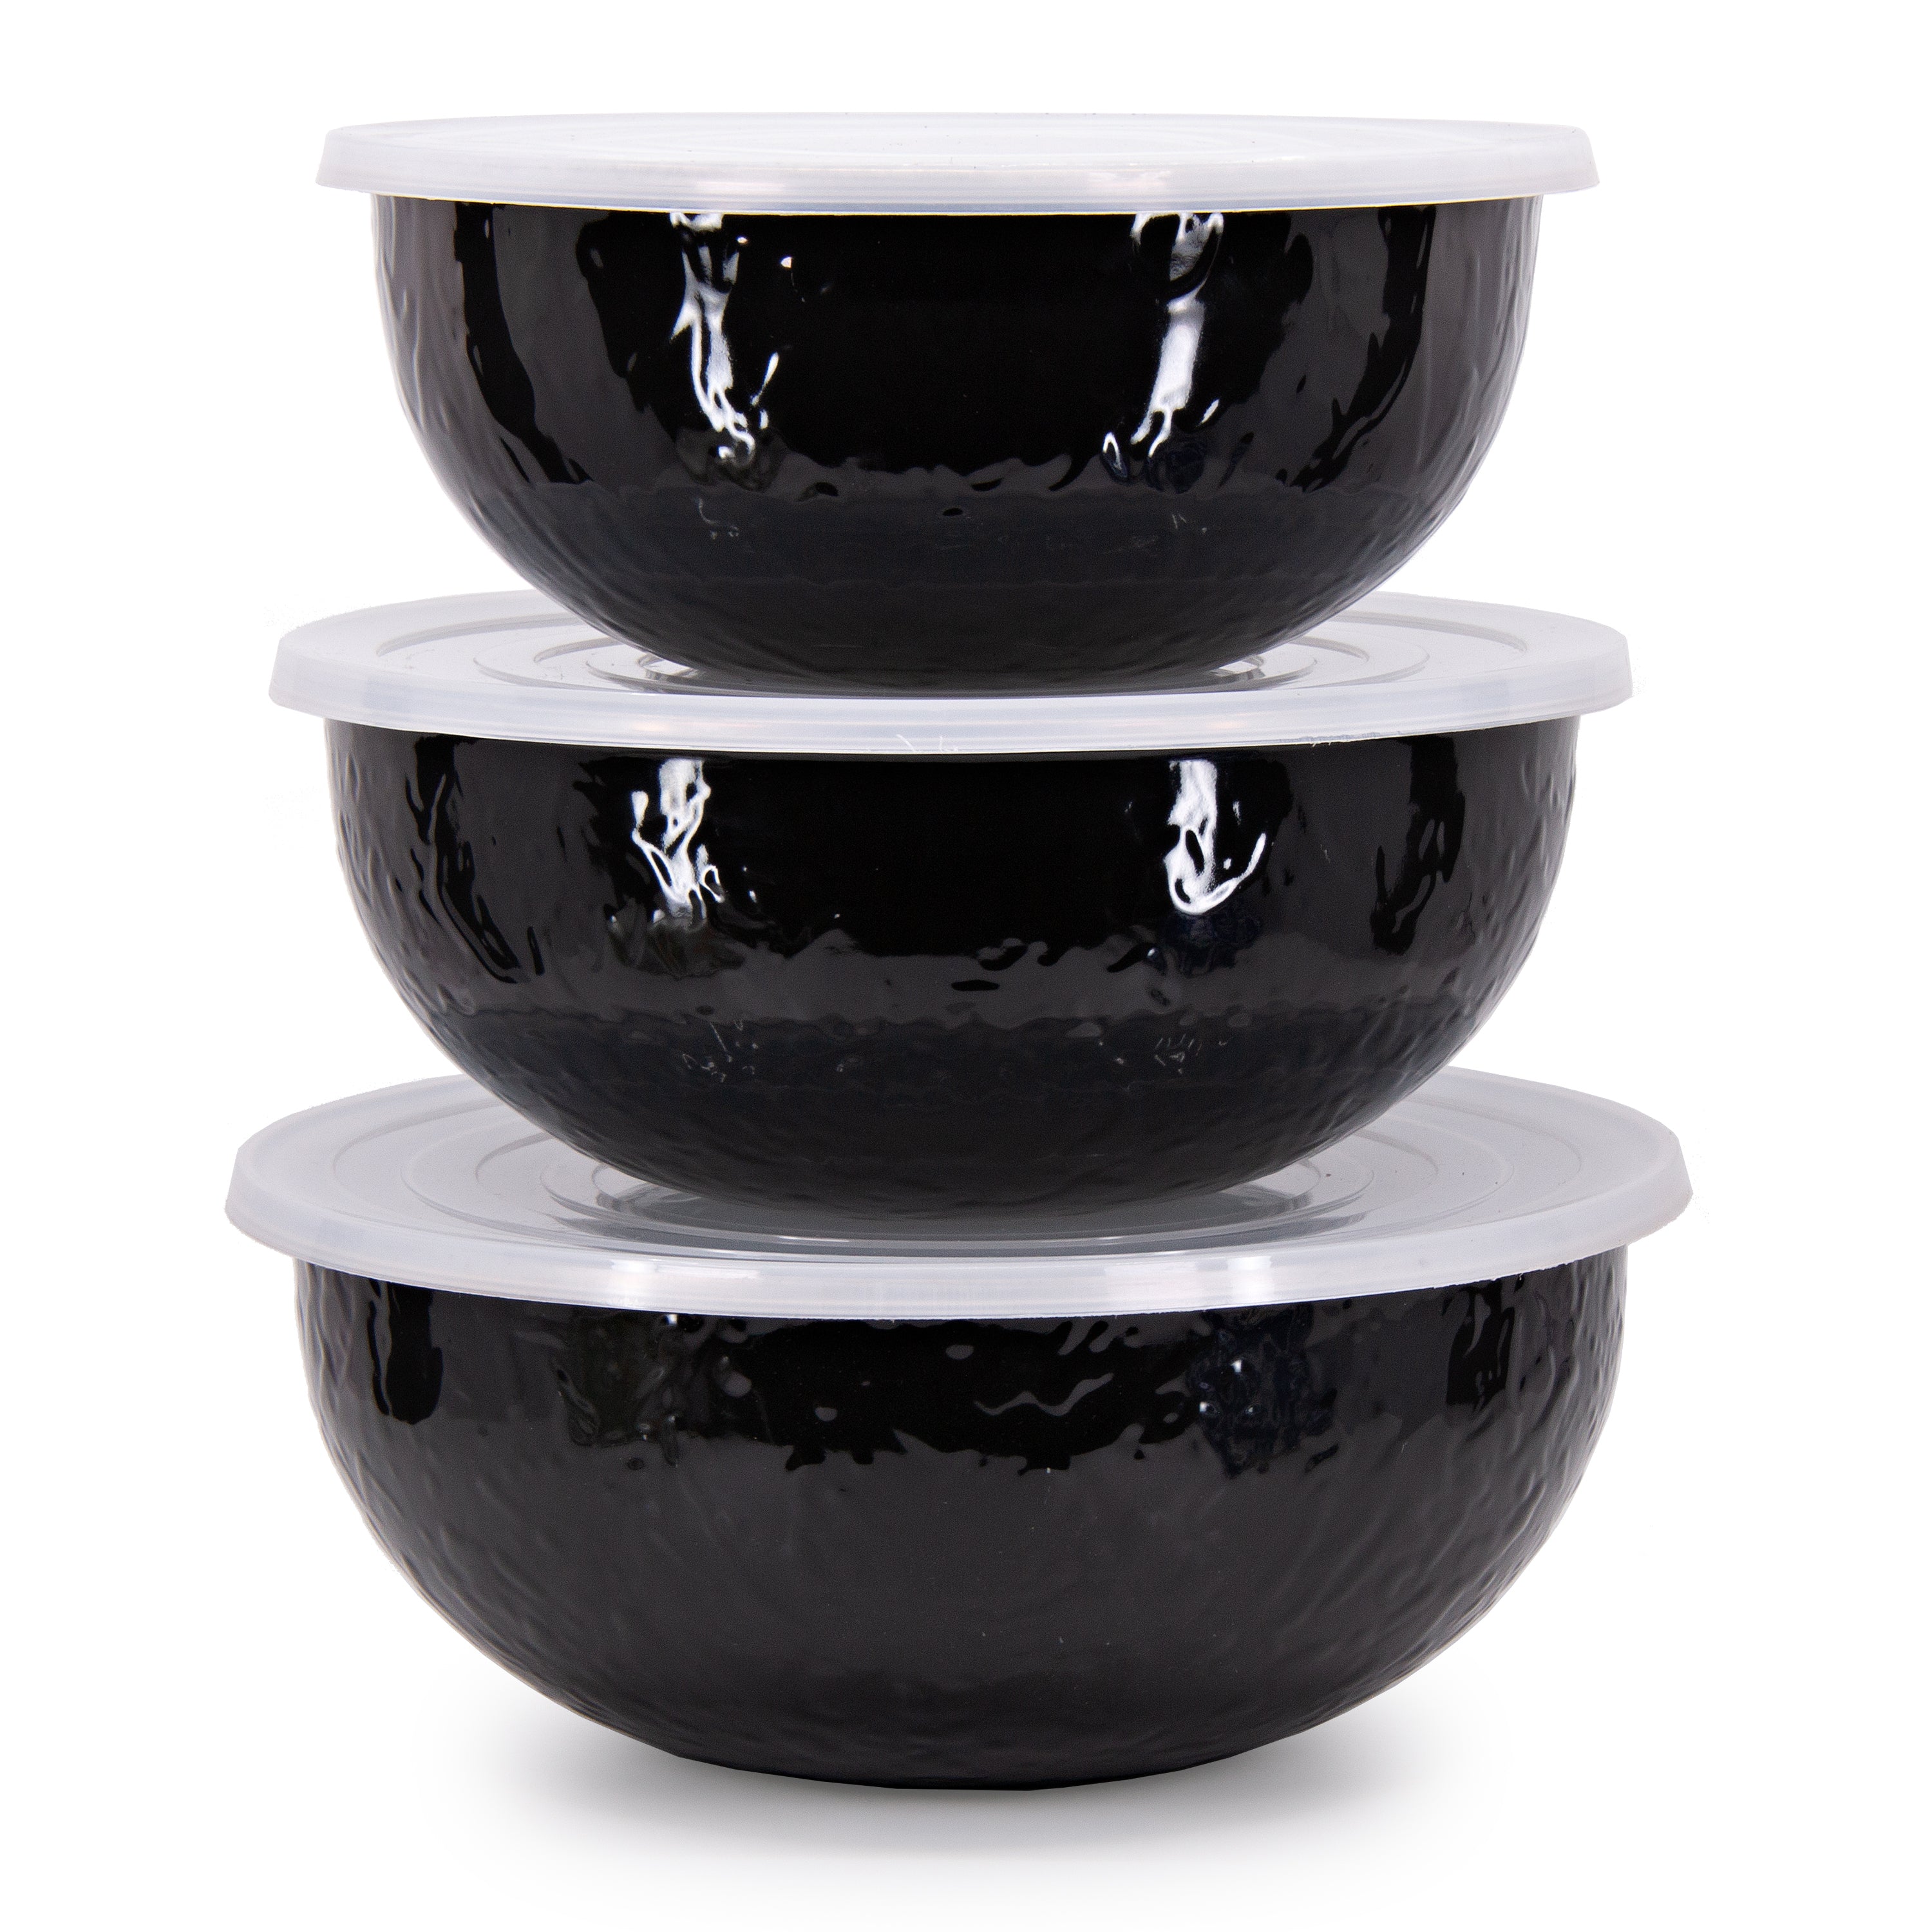 BL54 - Mixing Bowls - Black Swirl Design - UPC 619199541340 – Golden Rabbit  Enamelware